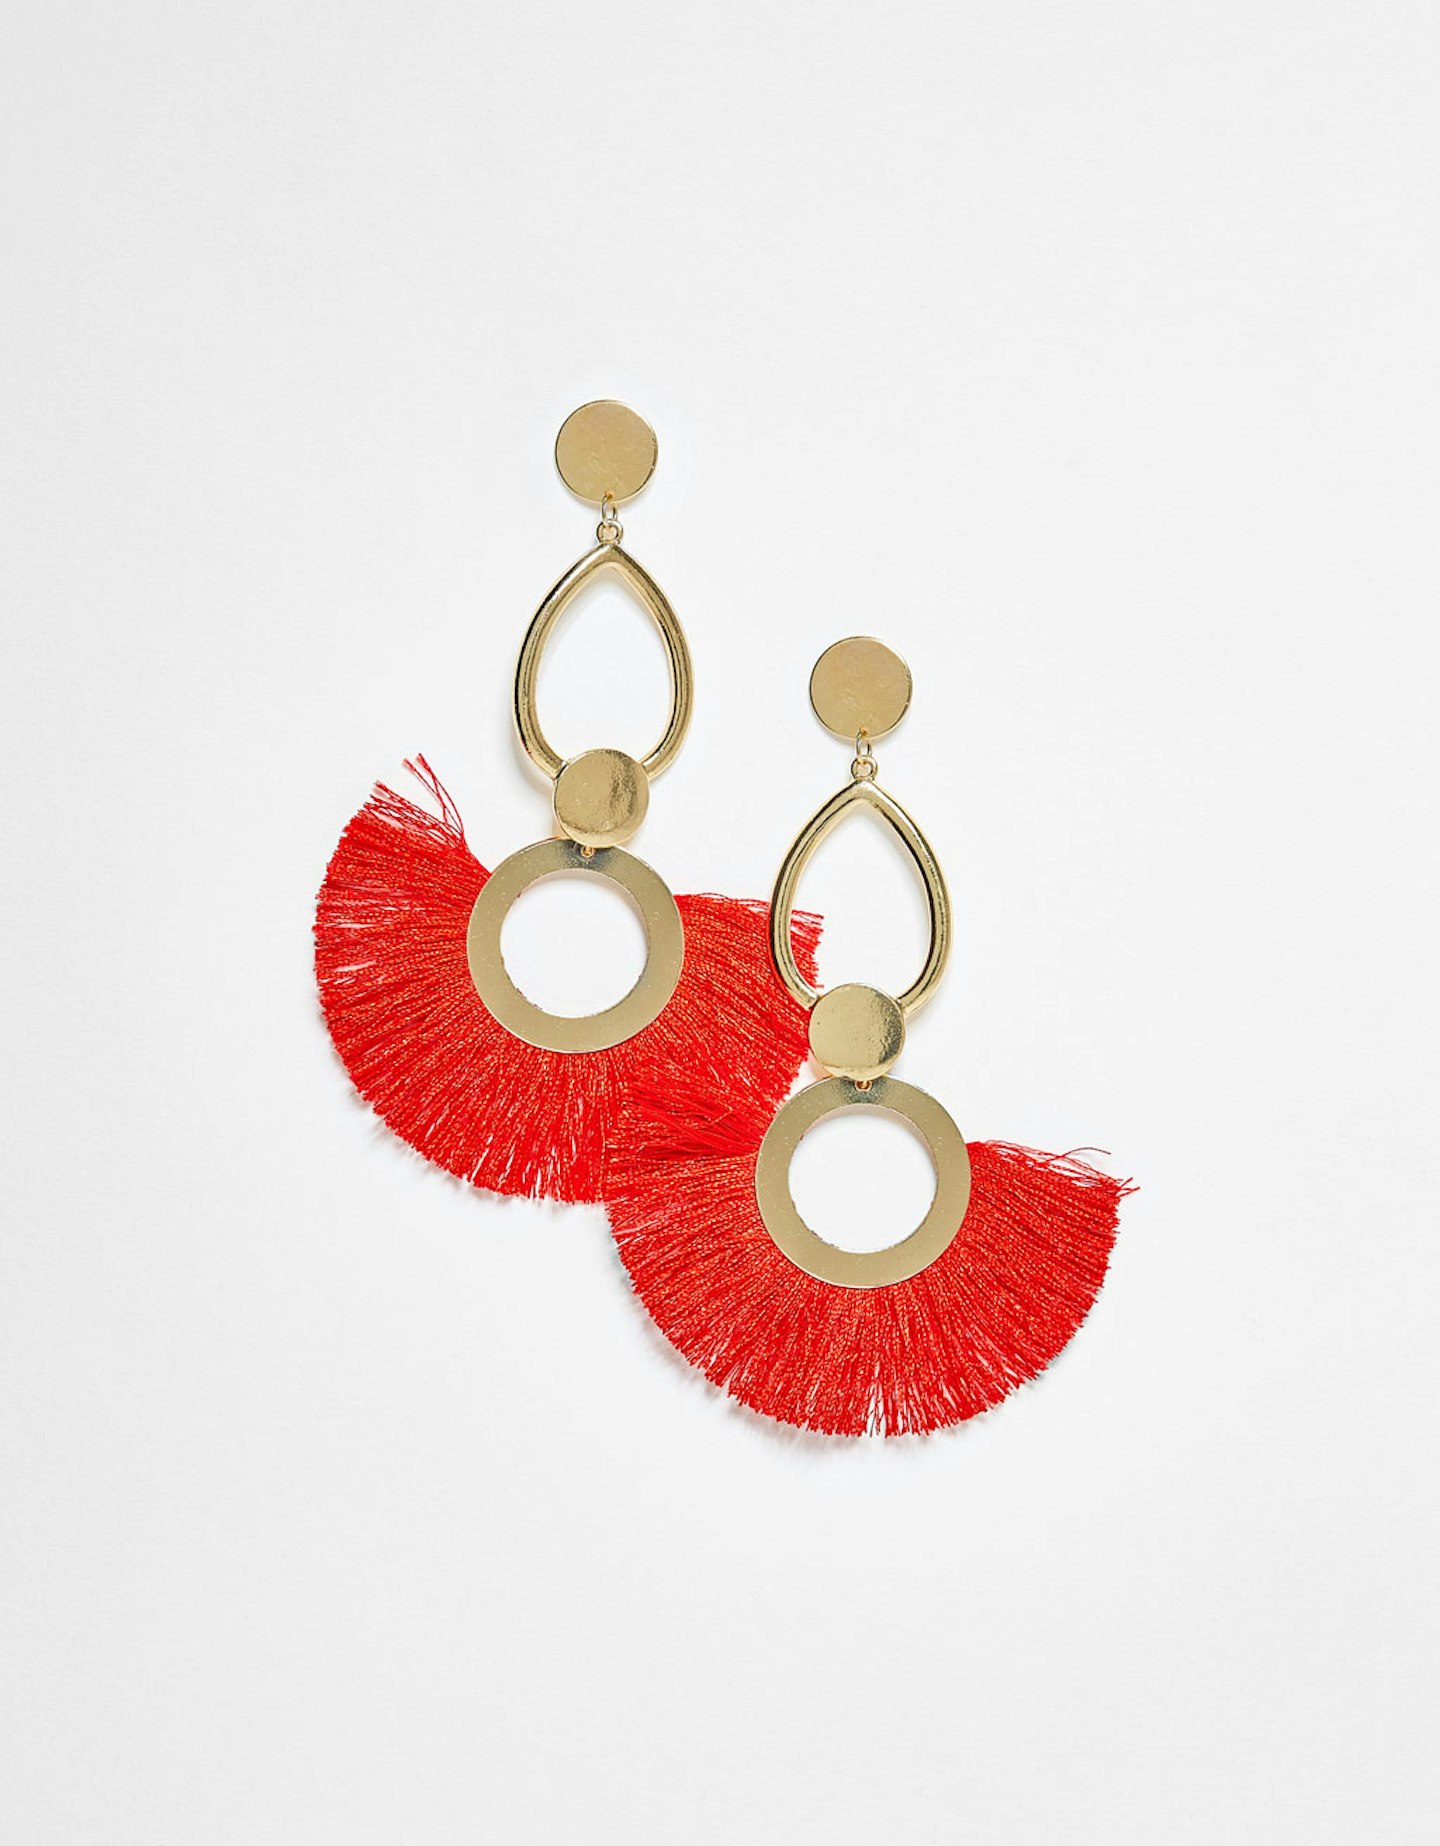 Round fringe earrings by Bershka, £5.99